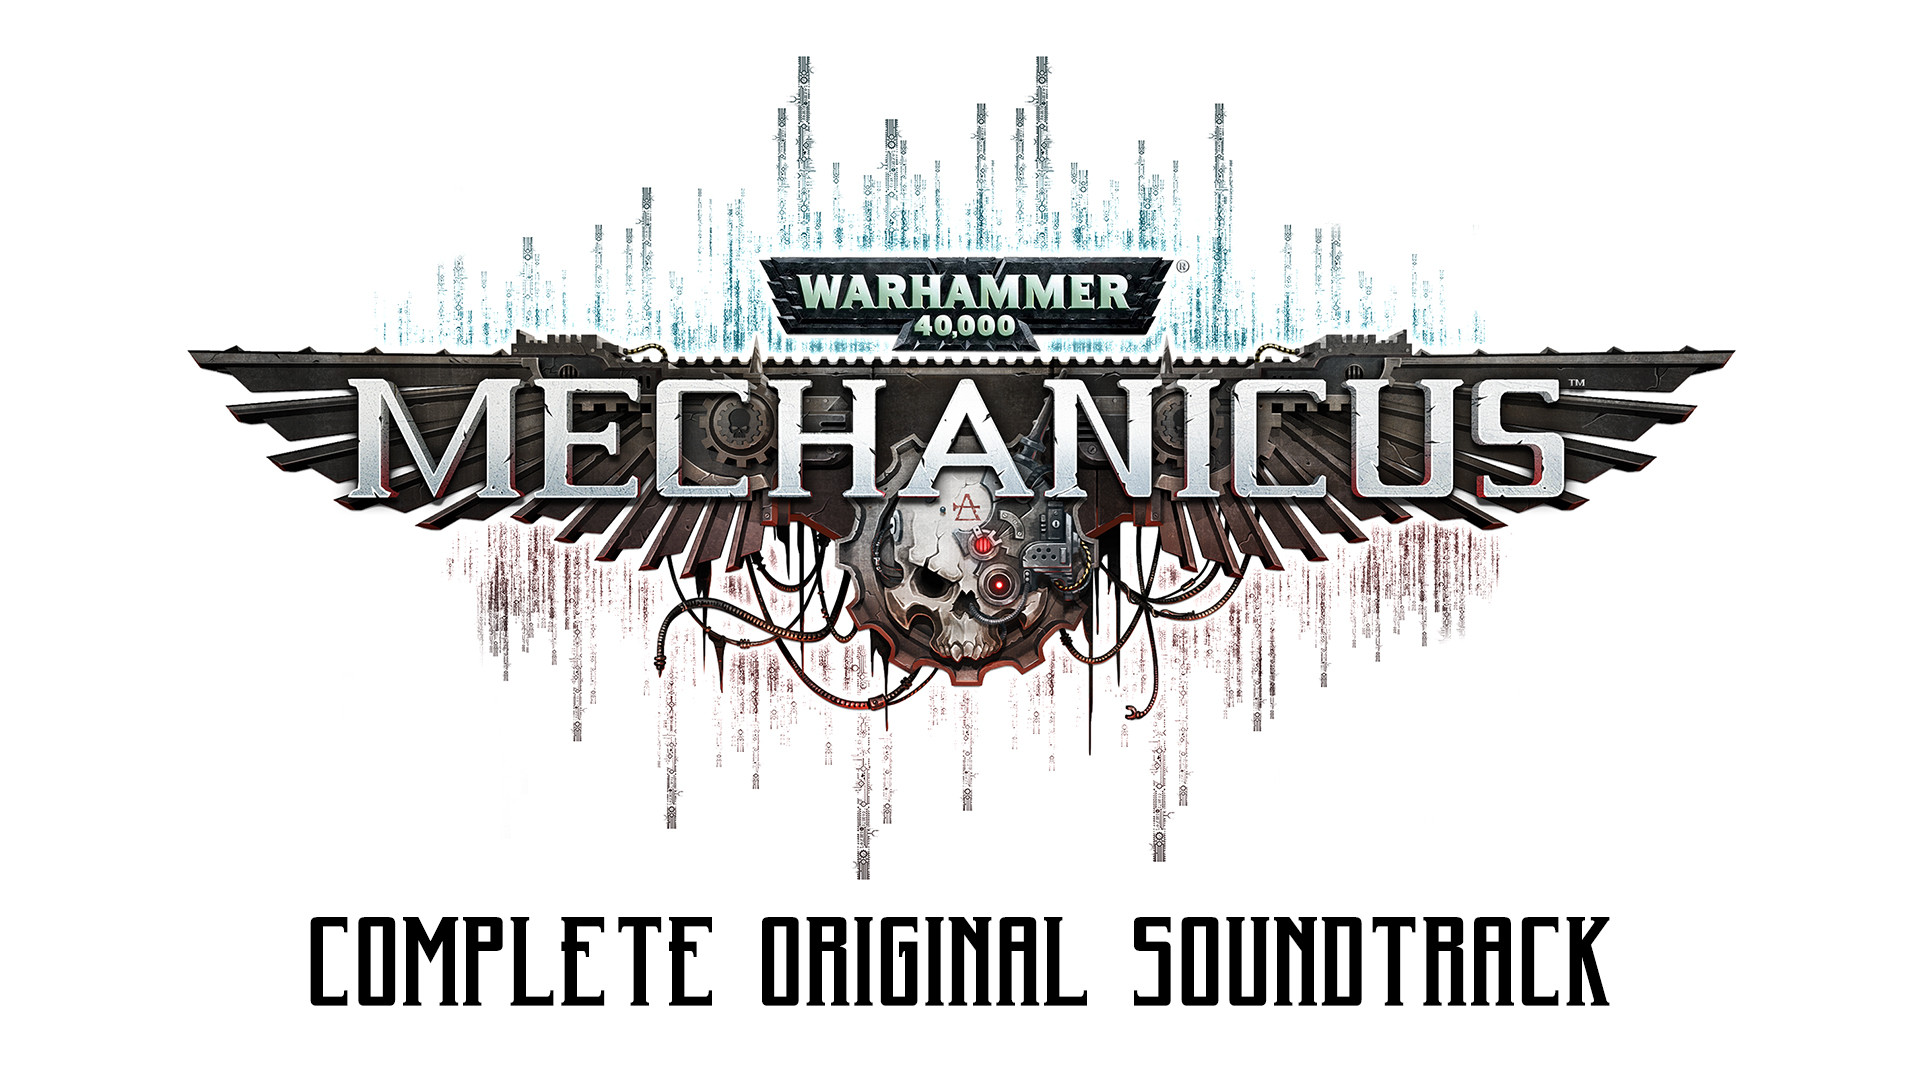 warhammer 40,000 freeblade soundtrack